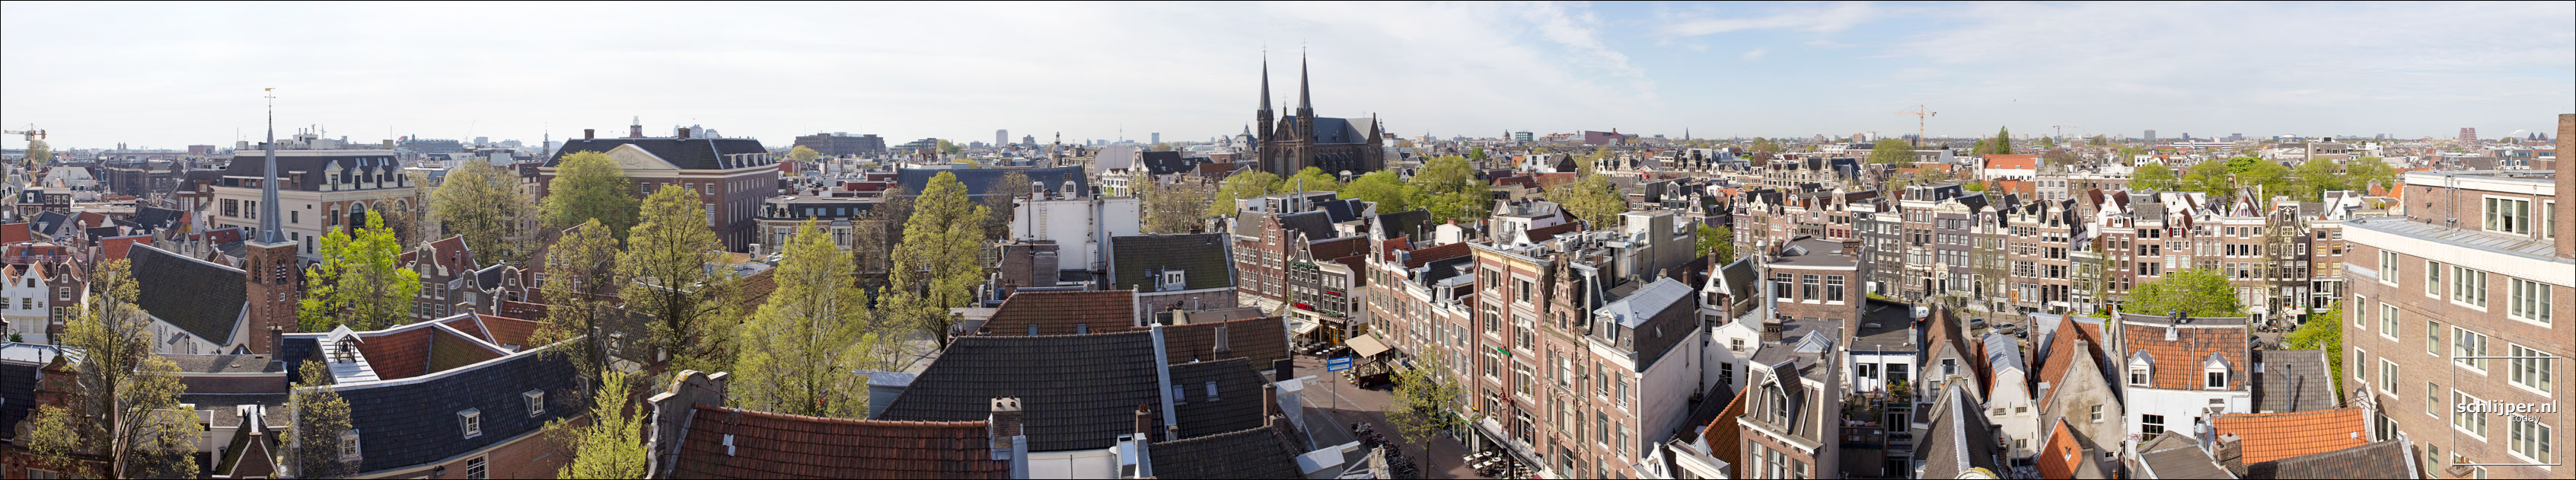 Nederland, Amsterdam, 17 april 2014